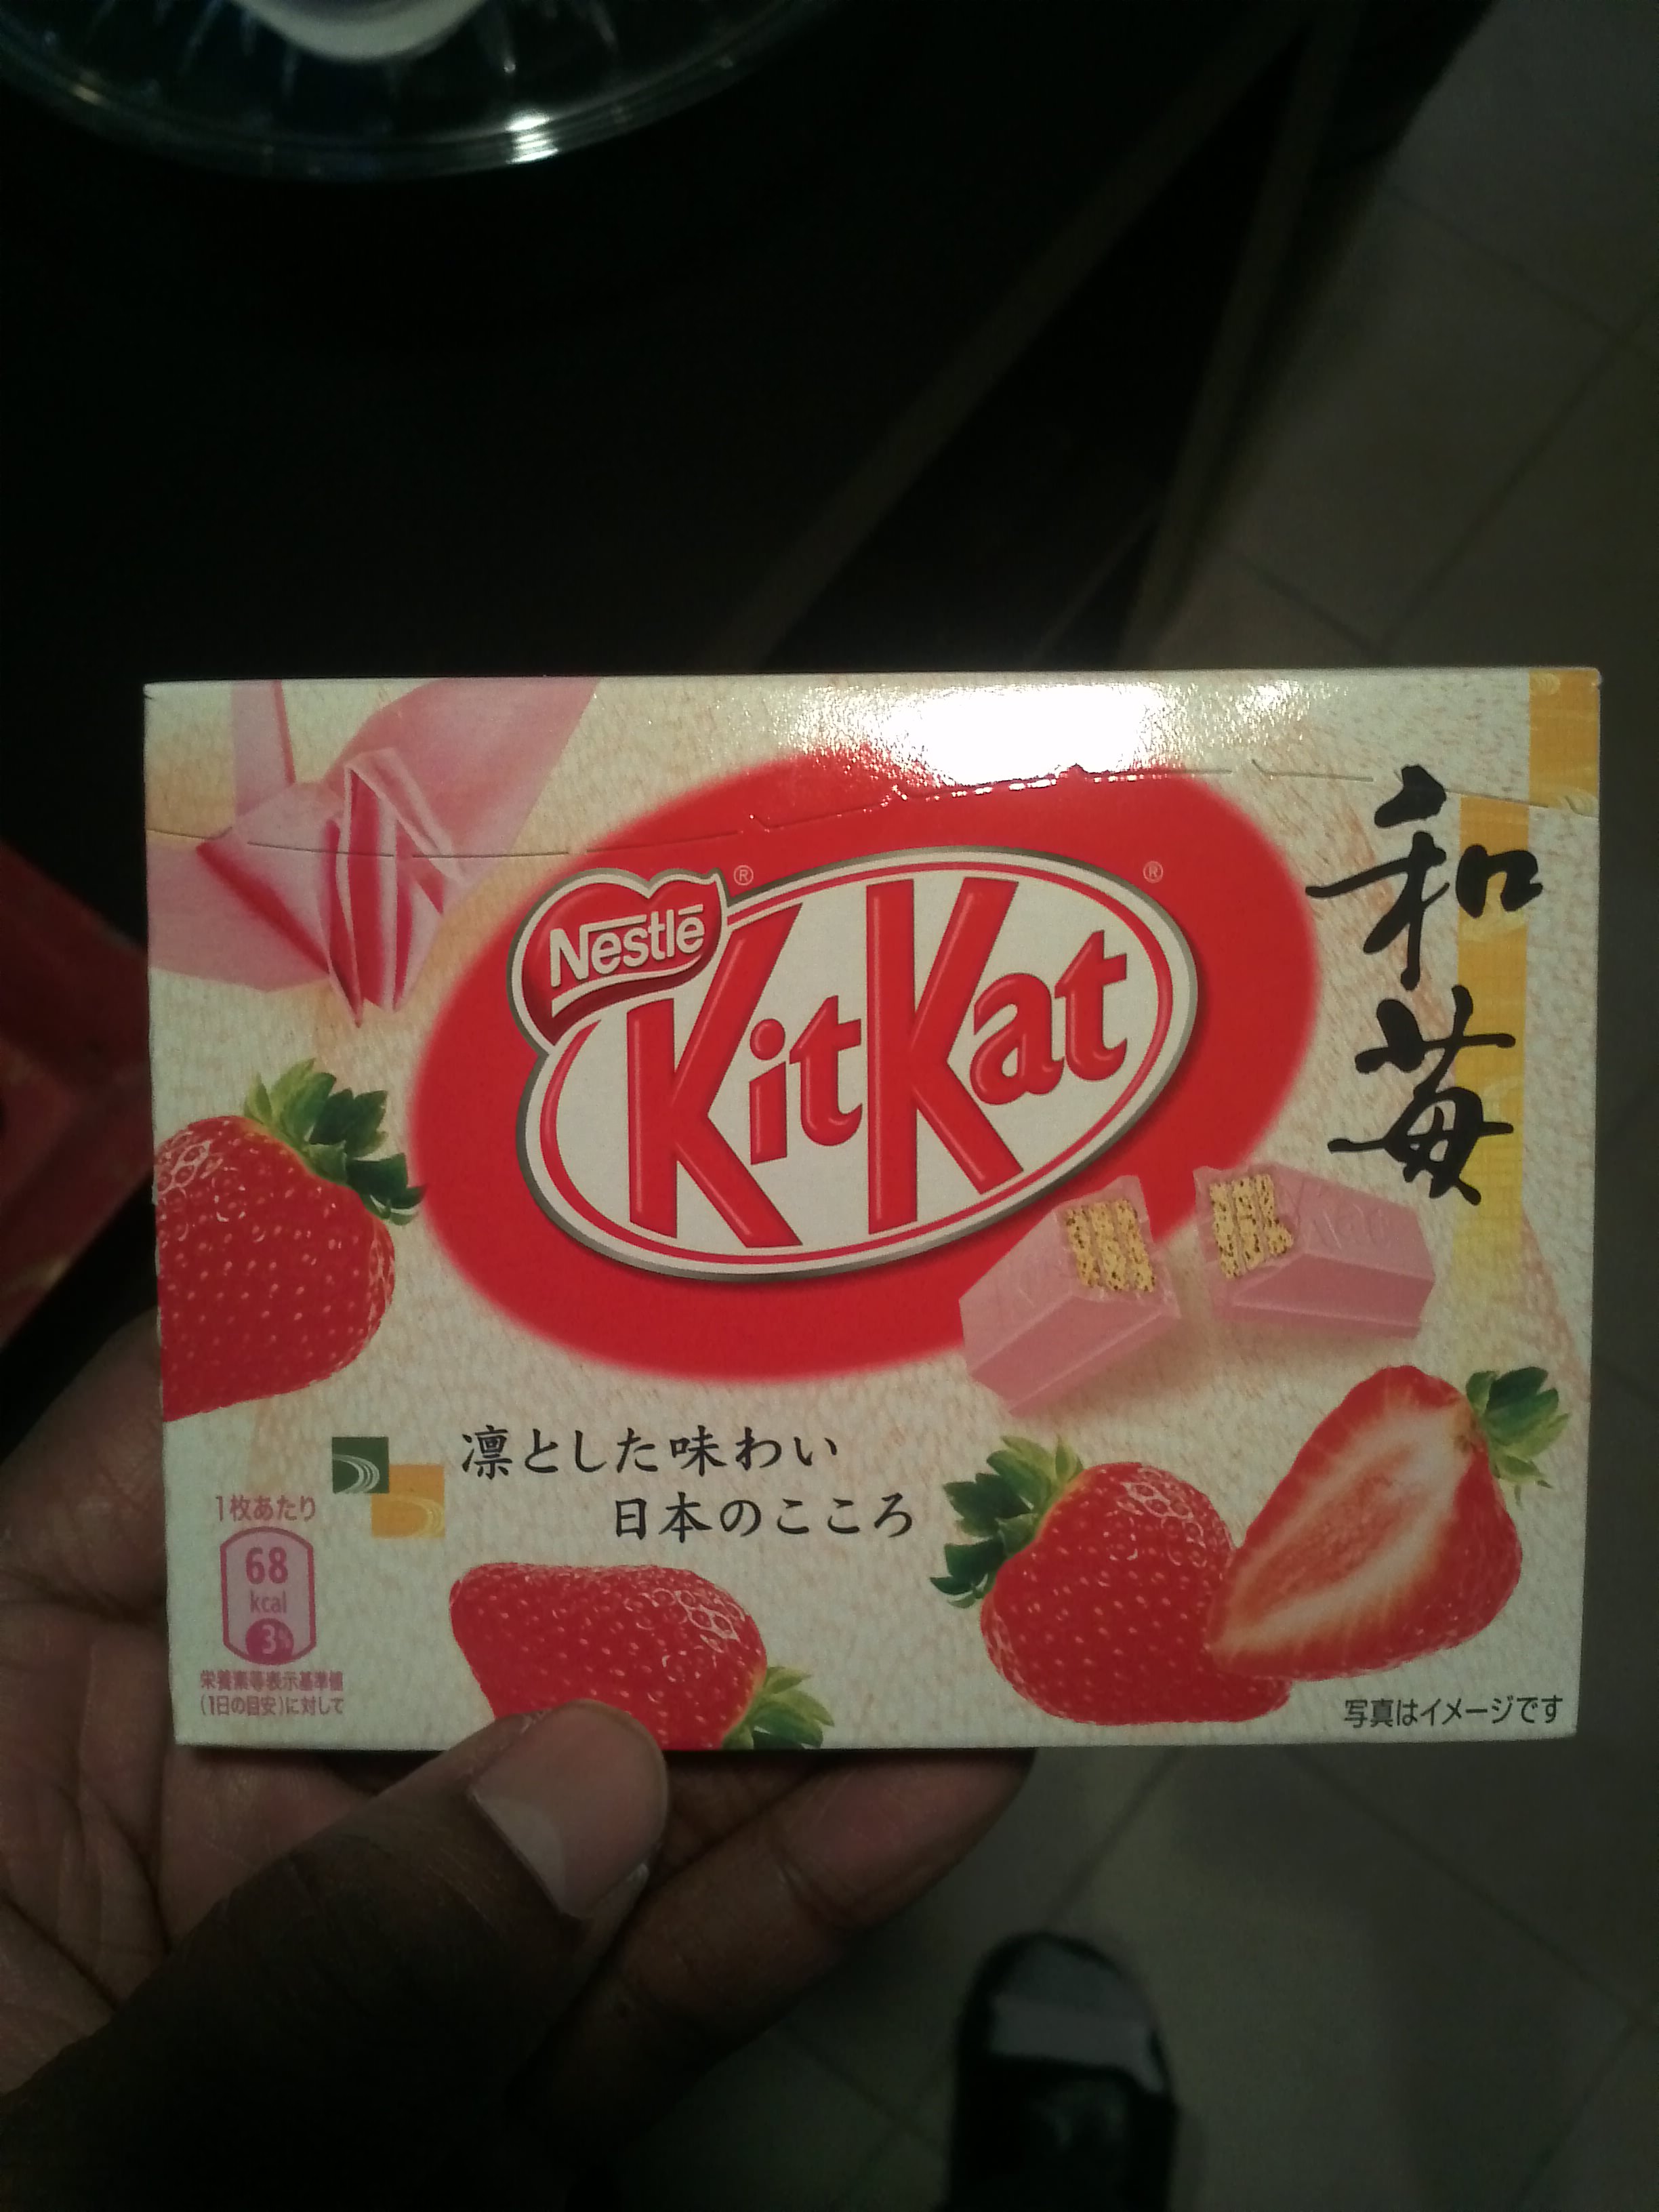 Strawberry Kit Kat from Japan